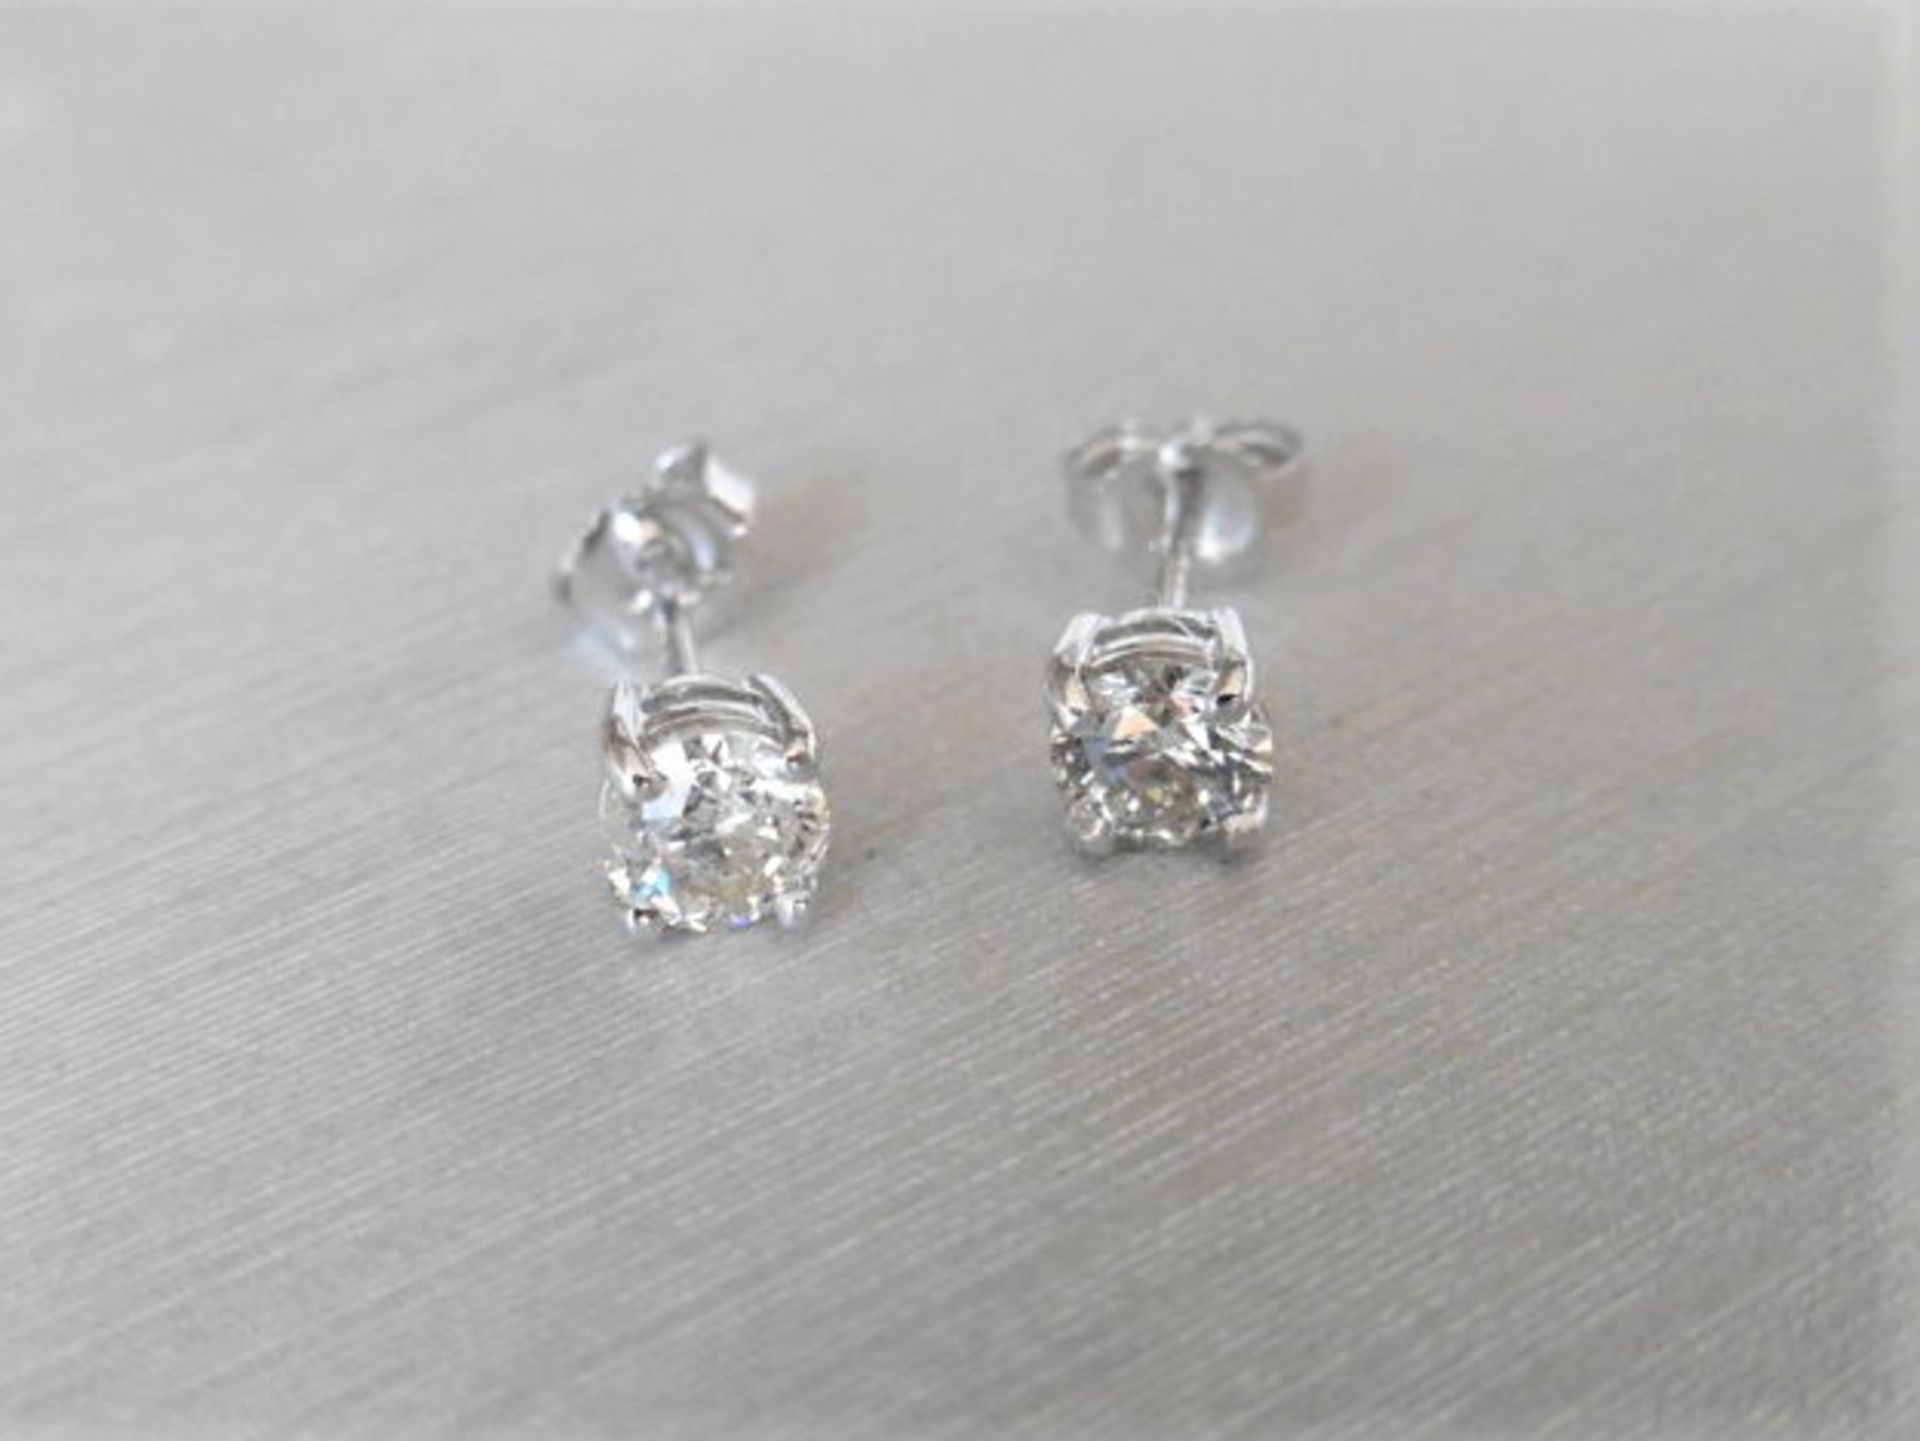 1.20ct diamond solitaire earrings set in 18ct white gold. 2 x brilliant cut diamonds, 0.60ct (